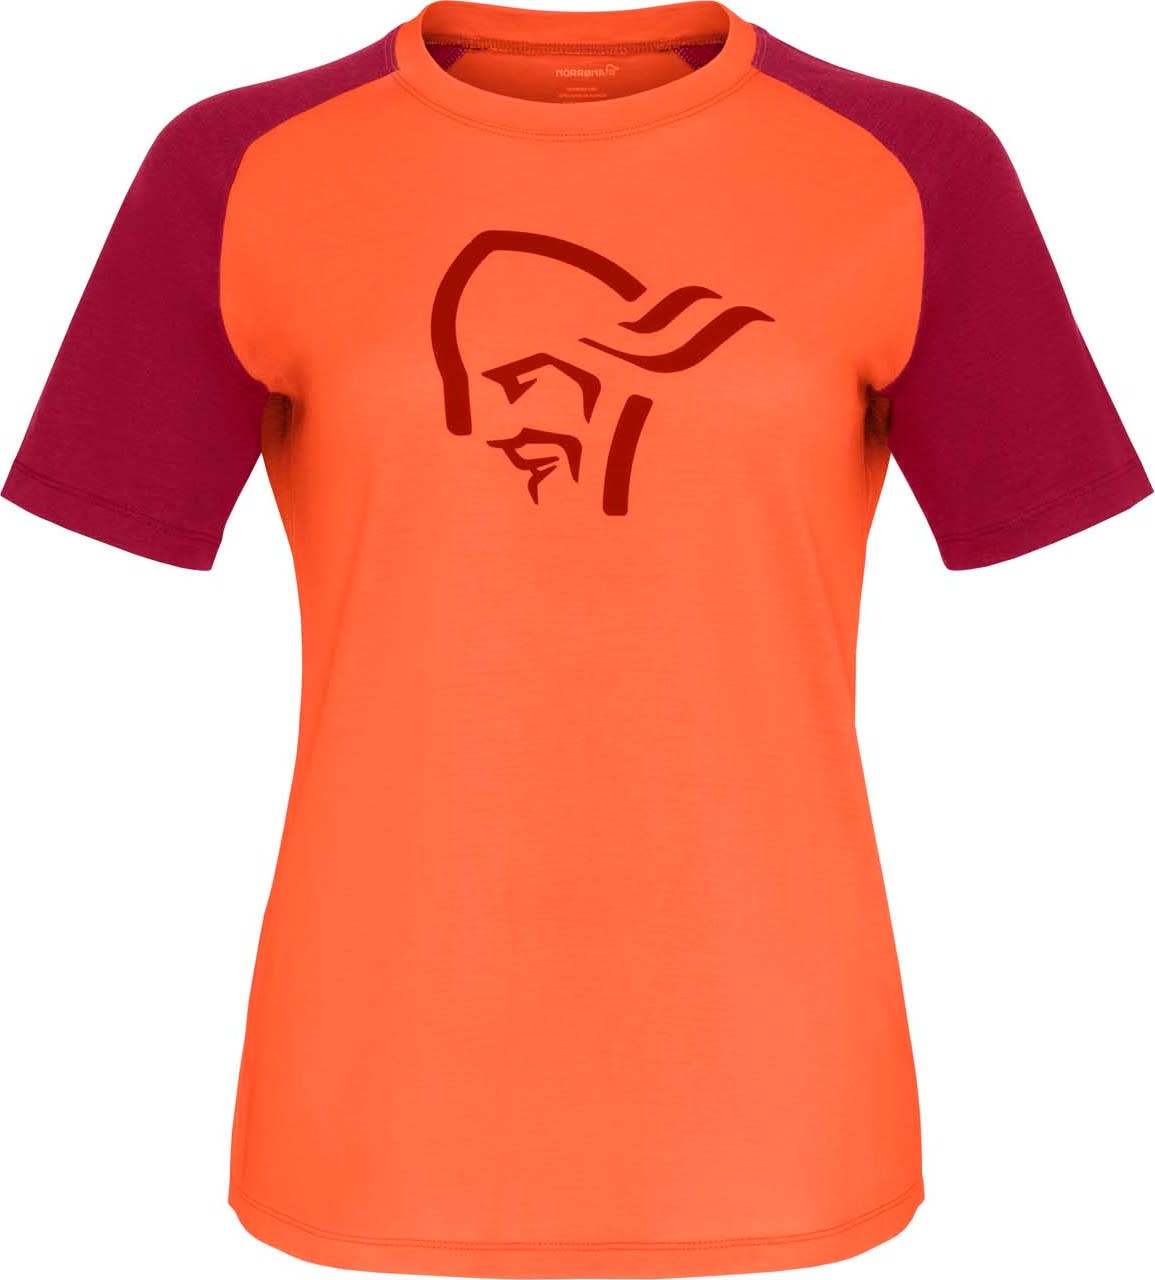 Women’s Norrøna Pureull T-Shirt Orange Alert/Rhubarb